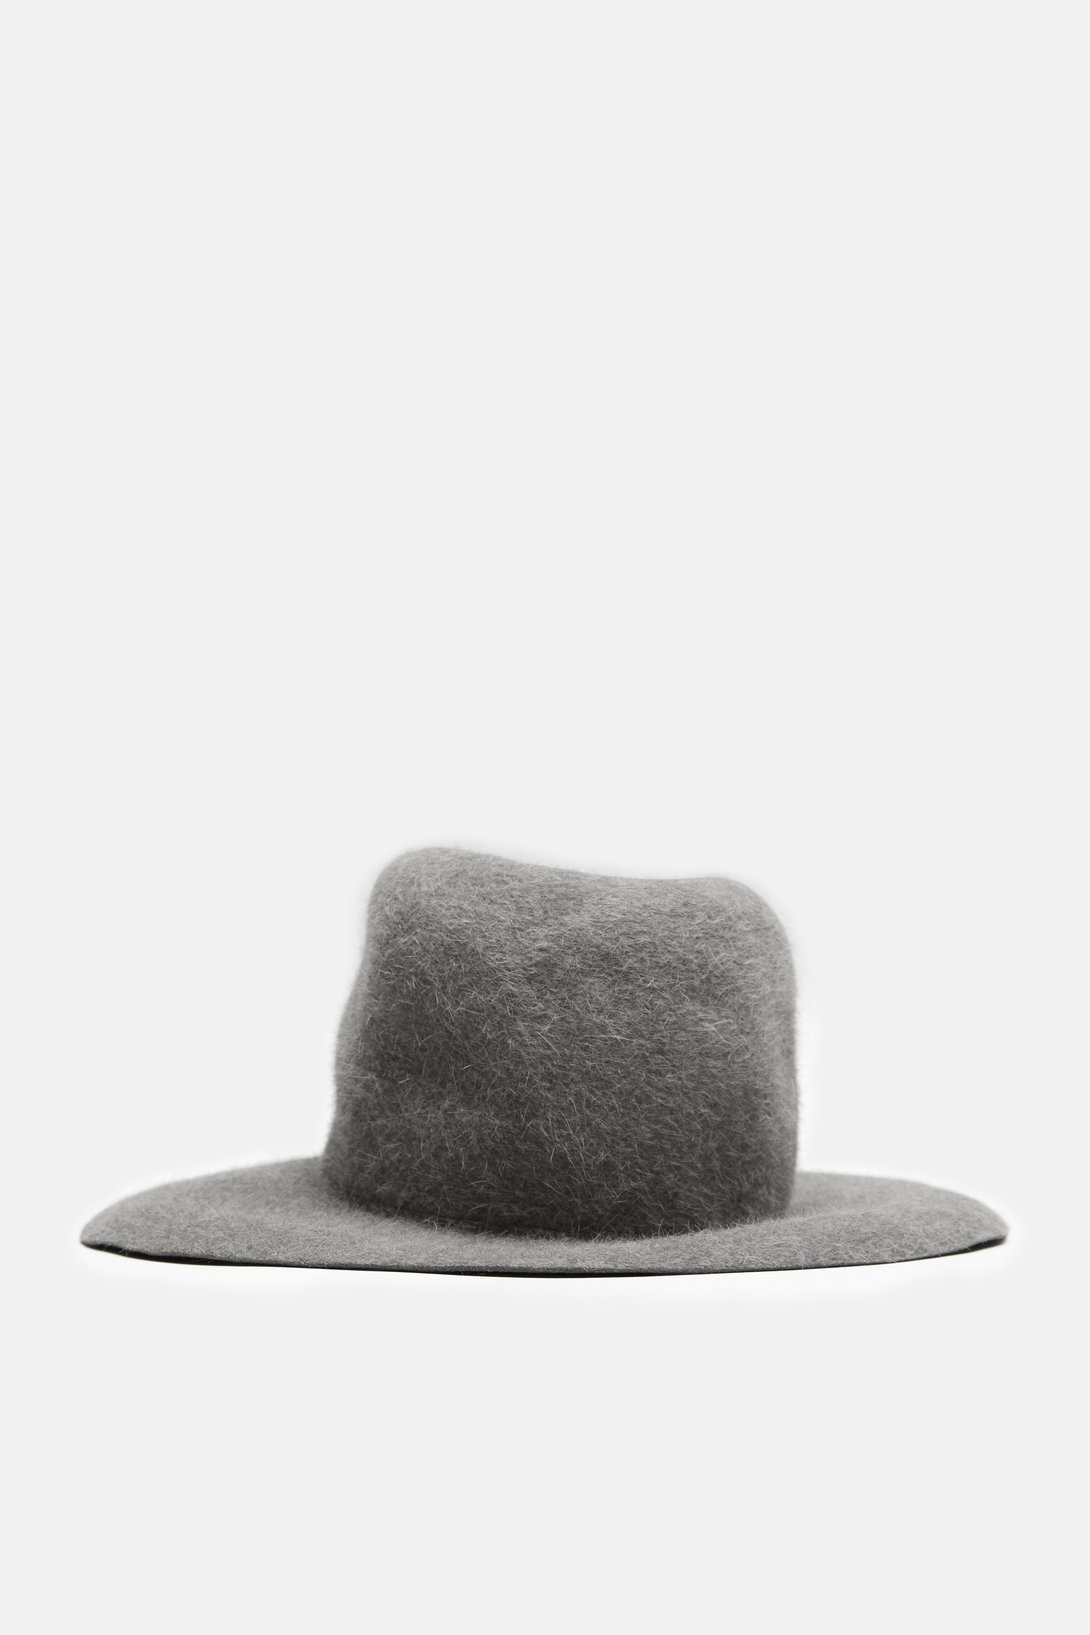 Albertus Swanepol Felted Hat $320